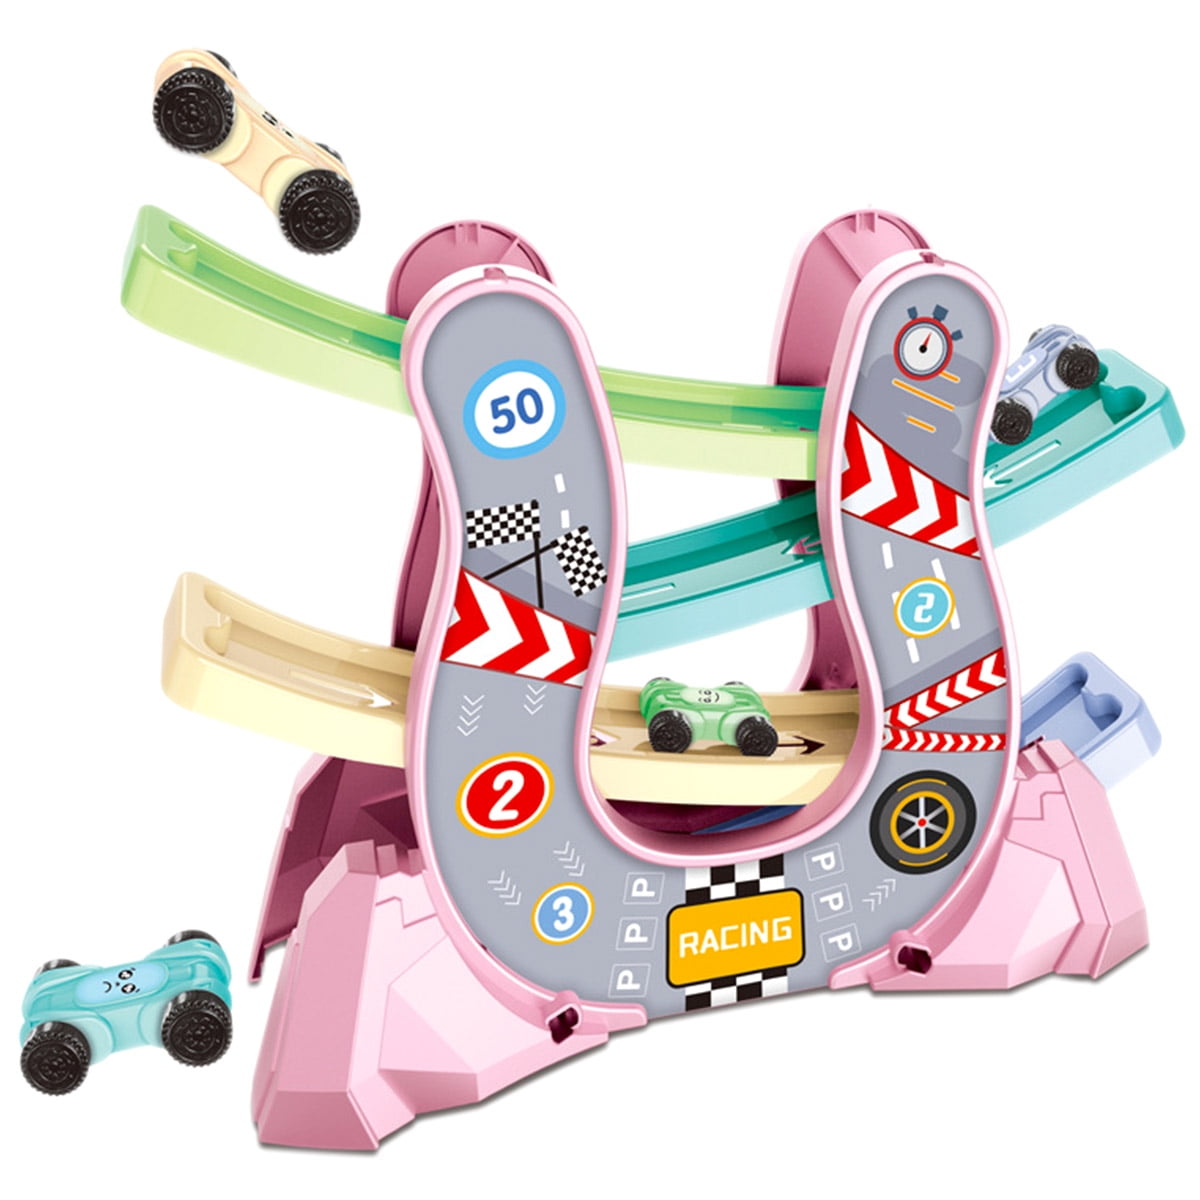 EpochAir Race Track Dinosaur Flexible Track Toy Set 2020 Xmas Gifts for boys 